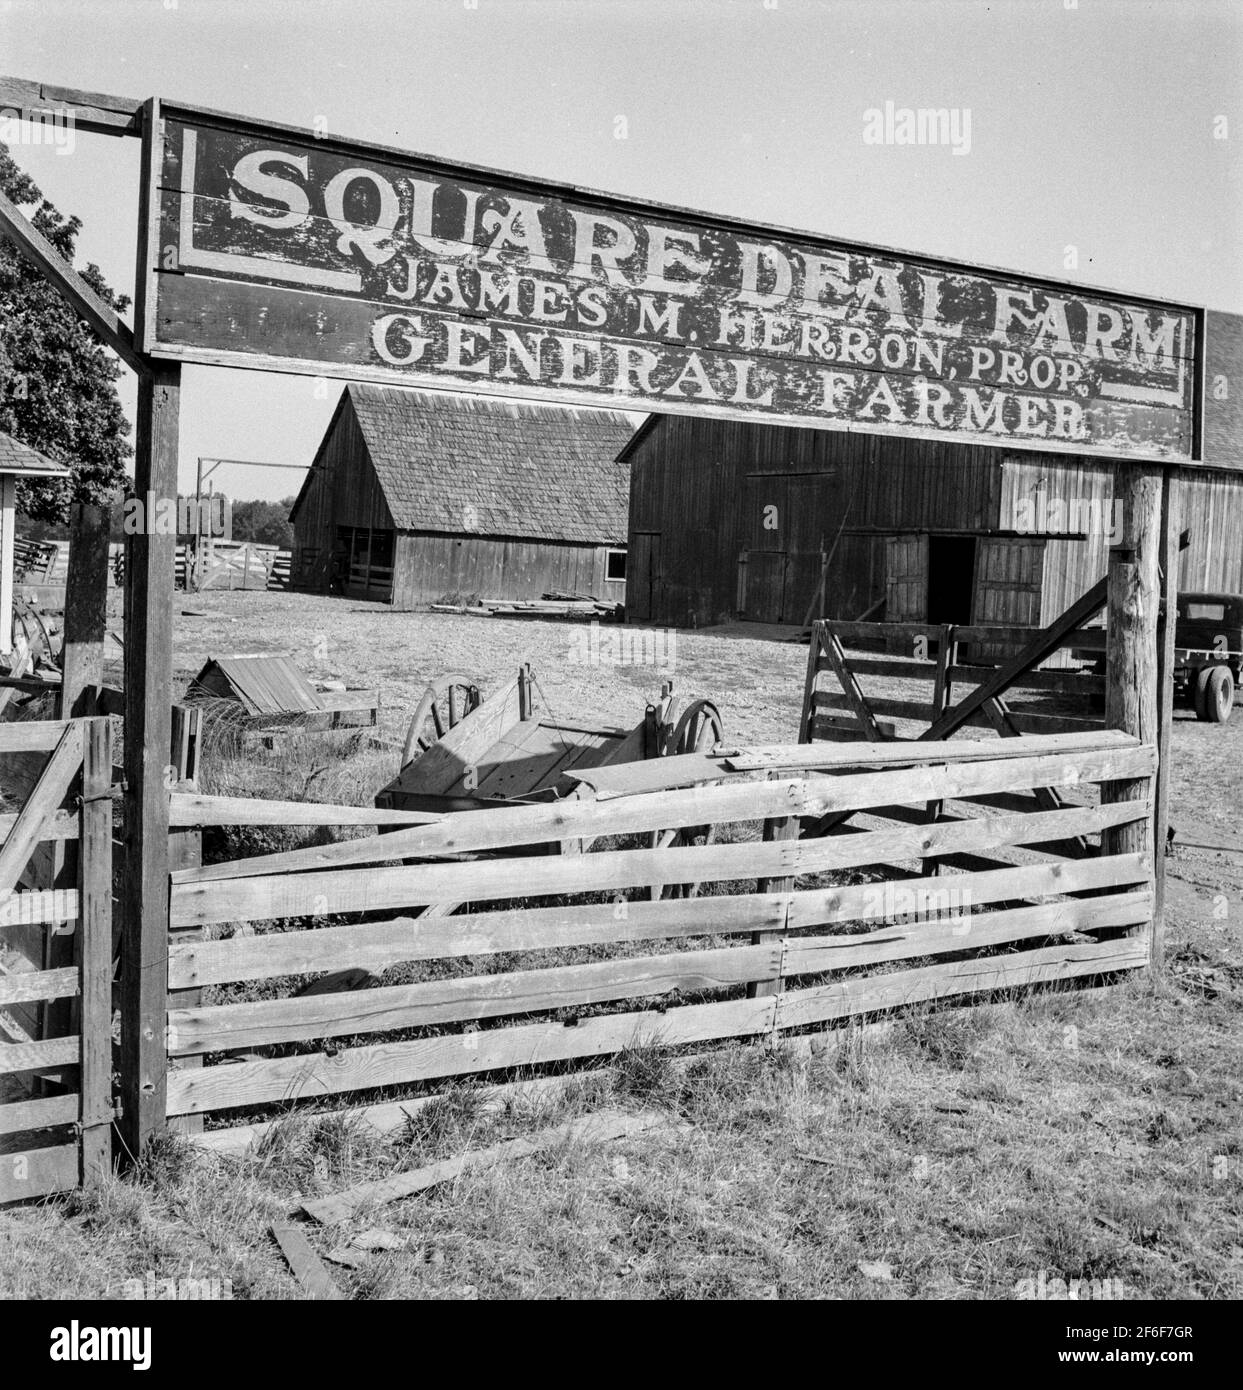 Square Deal farm gate. On U.S. 99. Benton County, Oregon, Williamette Valley. 1939. Photograph by Dorothea Lange. Stock Photo